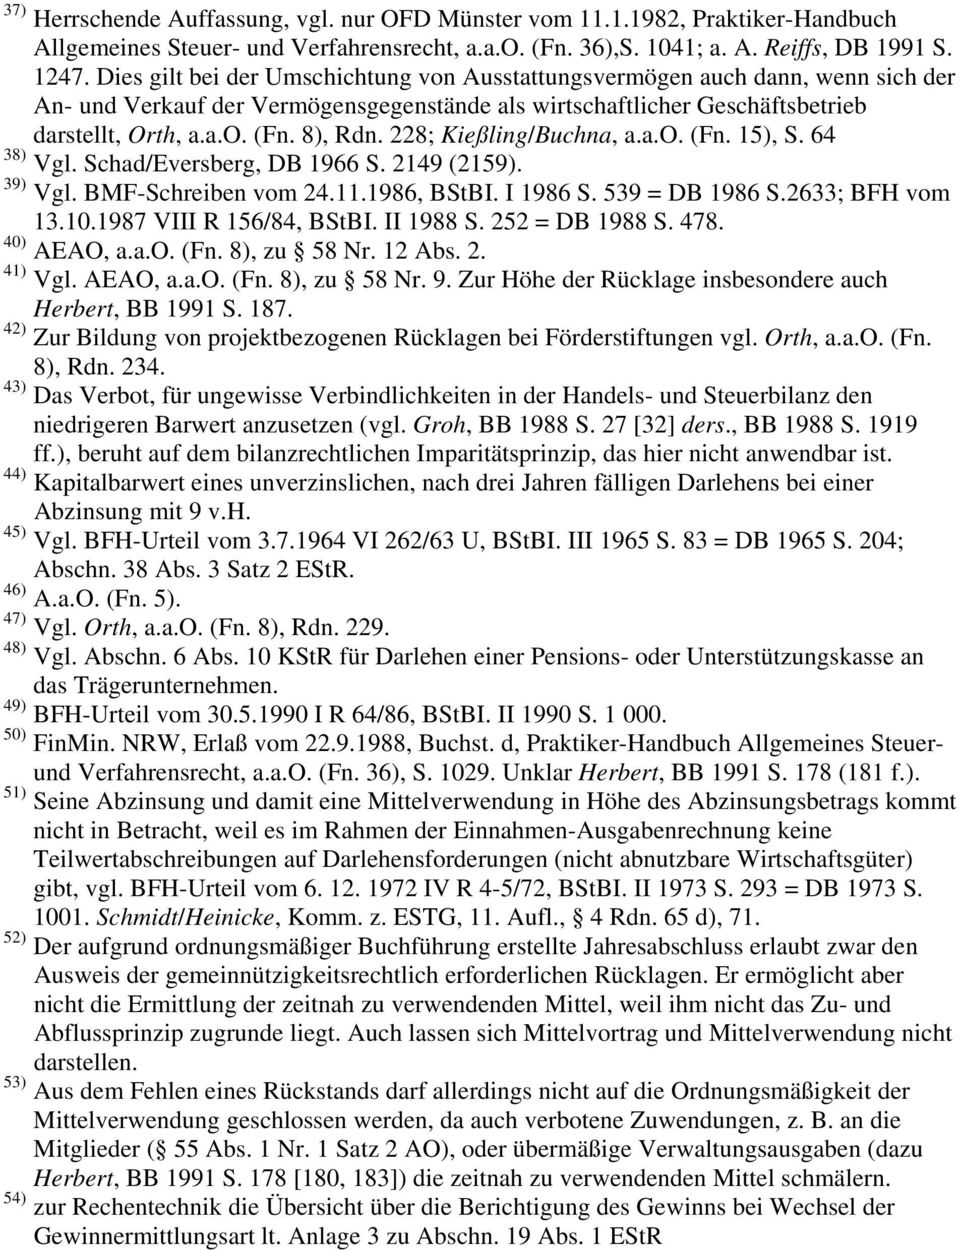 228; Kießling/Buchna, a.a.o. (Fn. 15), S. 64 38) Vgl. Schad/Eversberg, DB 1966 S. 2149 (2159). 39) Vgl. BMF-Schreiben vom 24.11.1986, BStBI. I 1986 S. 539 = DB 1986 S.2633; BFH vom 13.10.